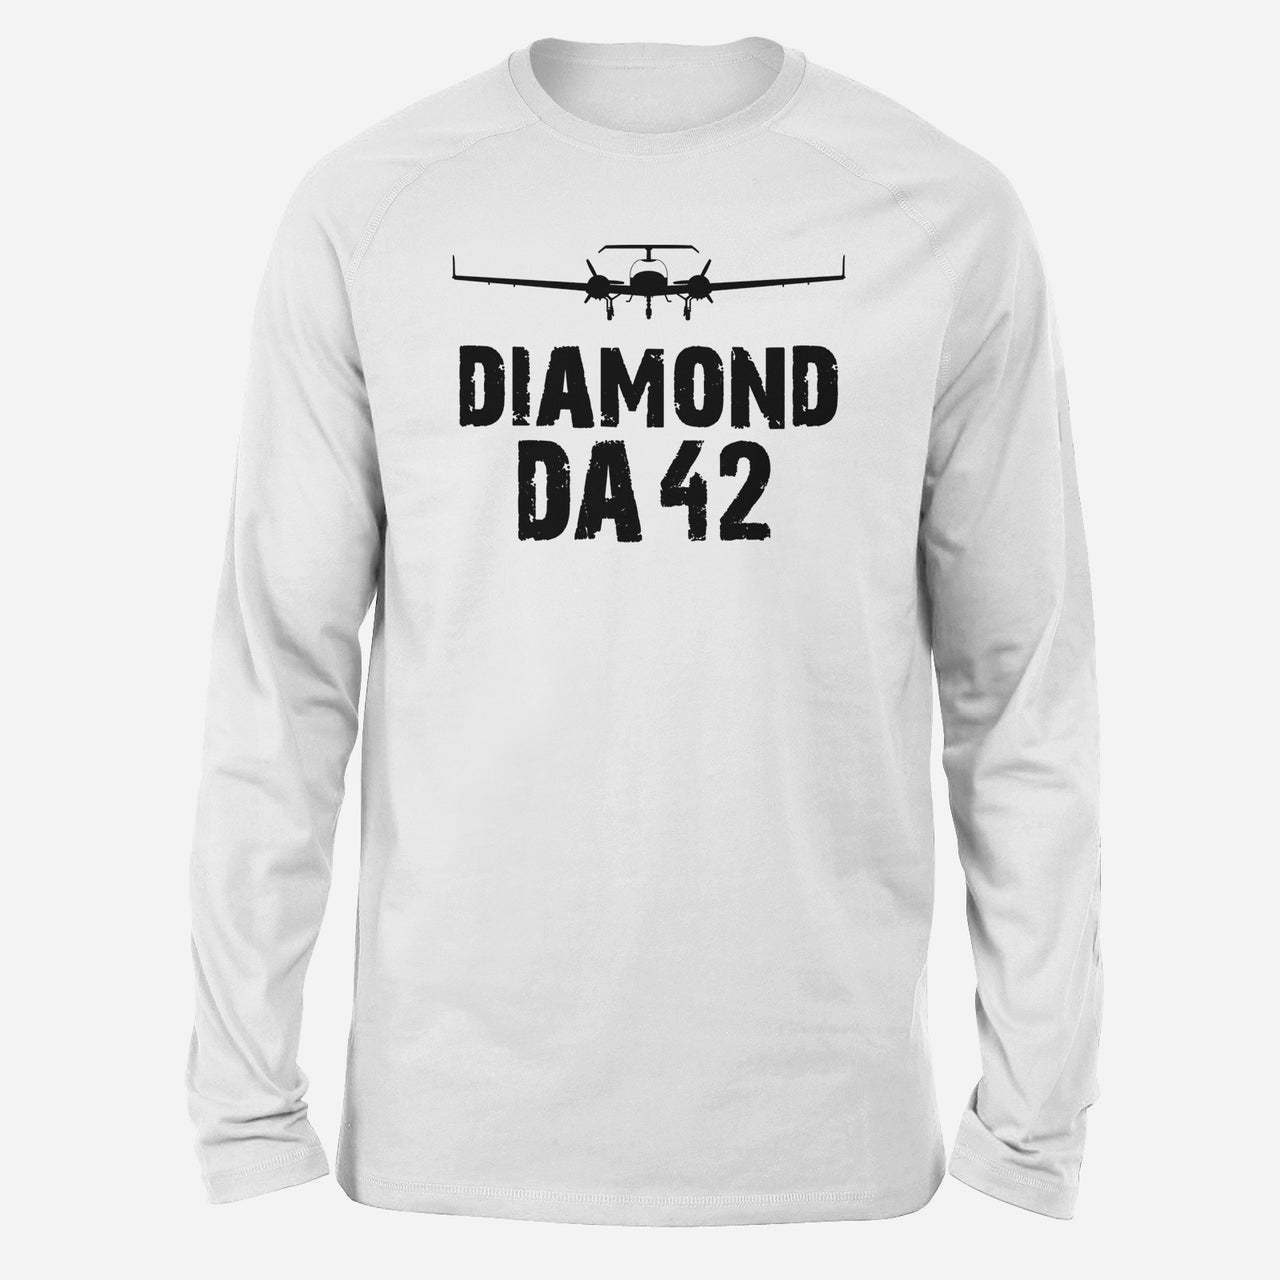 Diamond DA42 & Plane Designed Long-Sleeve T-Shirts